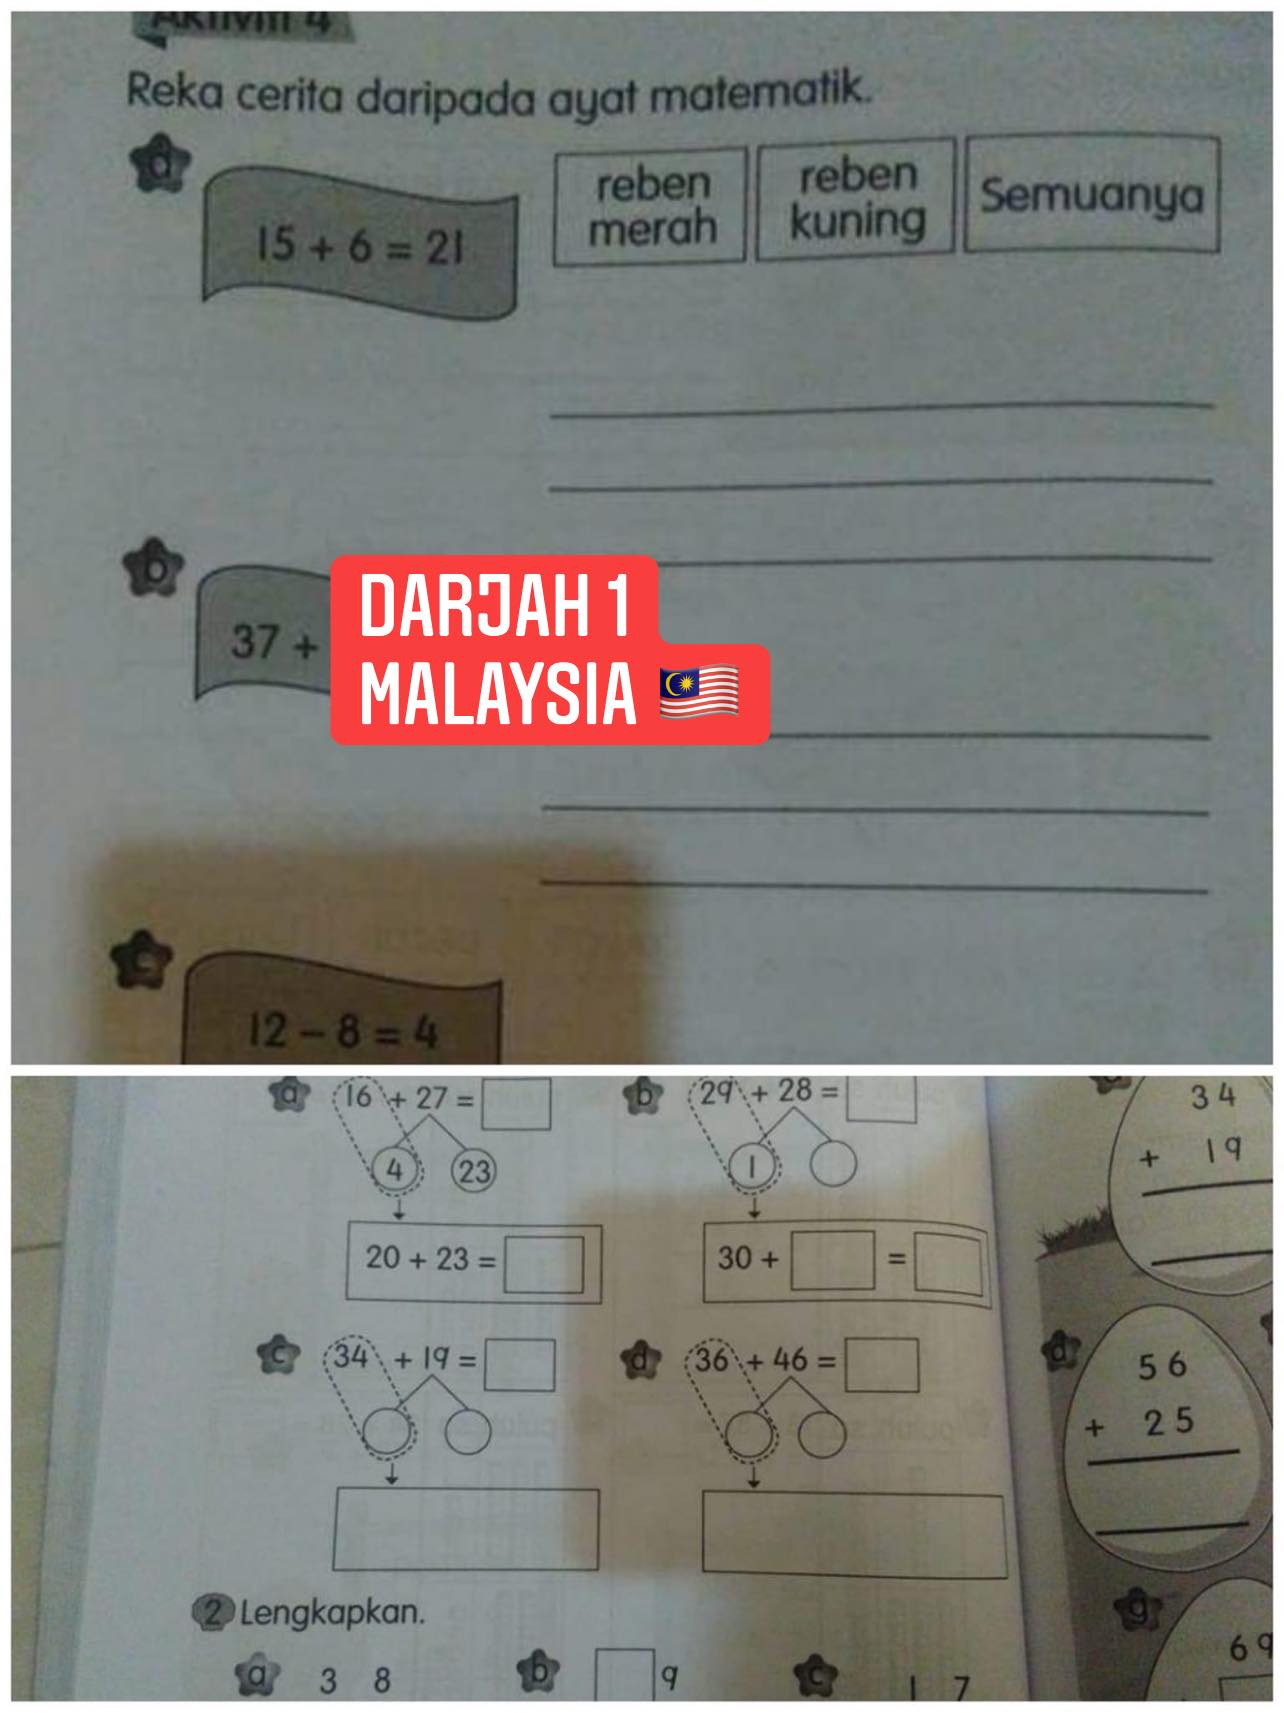 M'sian dad explains why us grade 1 syllabus is simpler than std 1 syllabus in m'sia